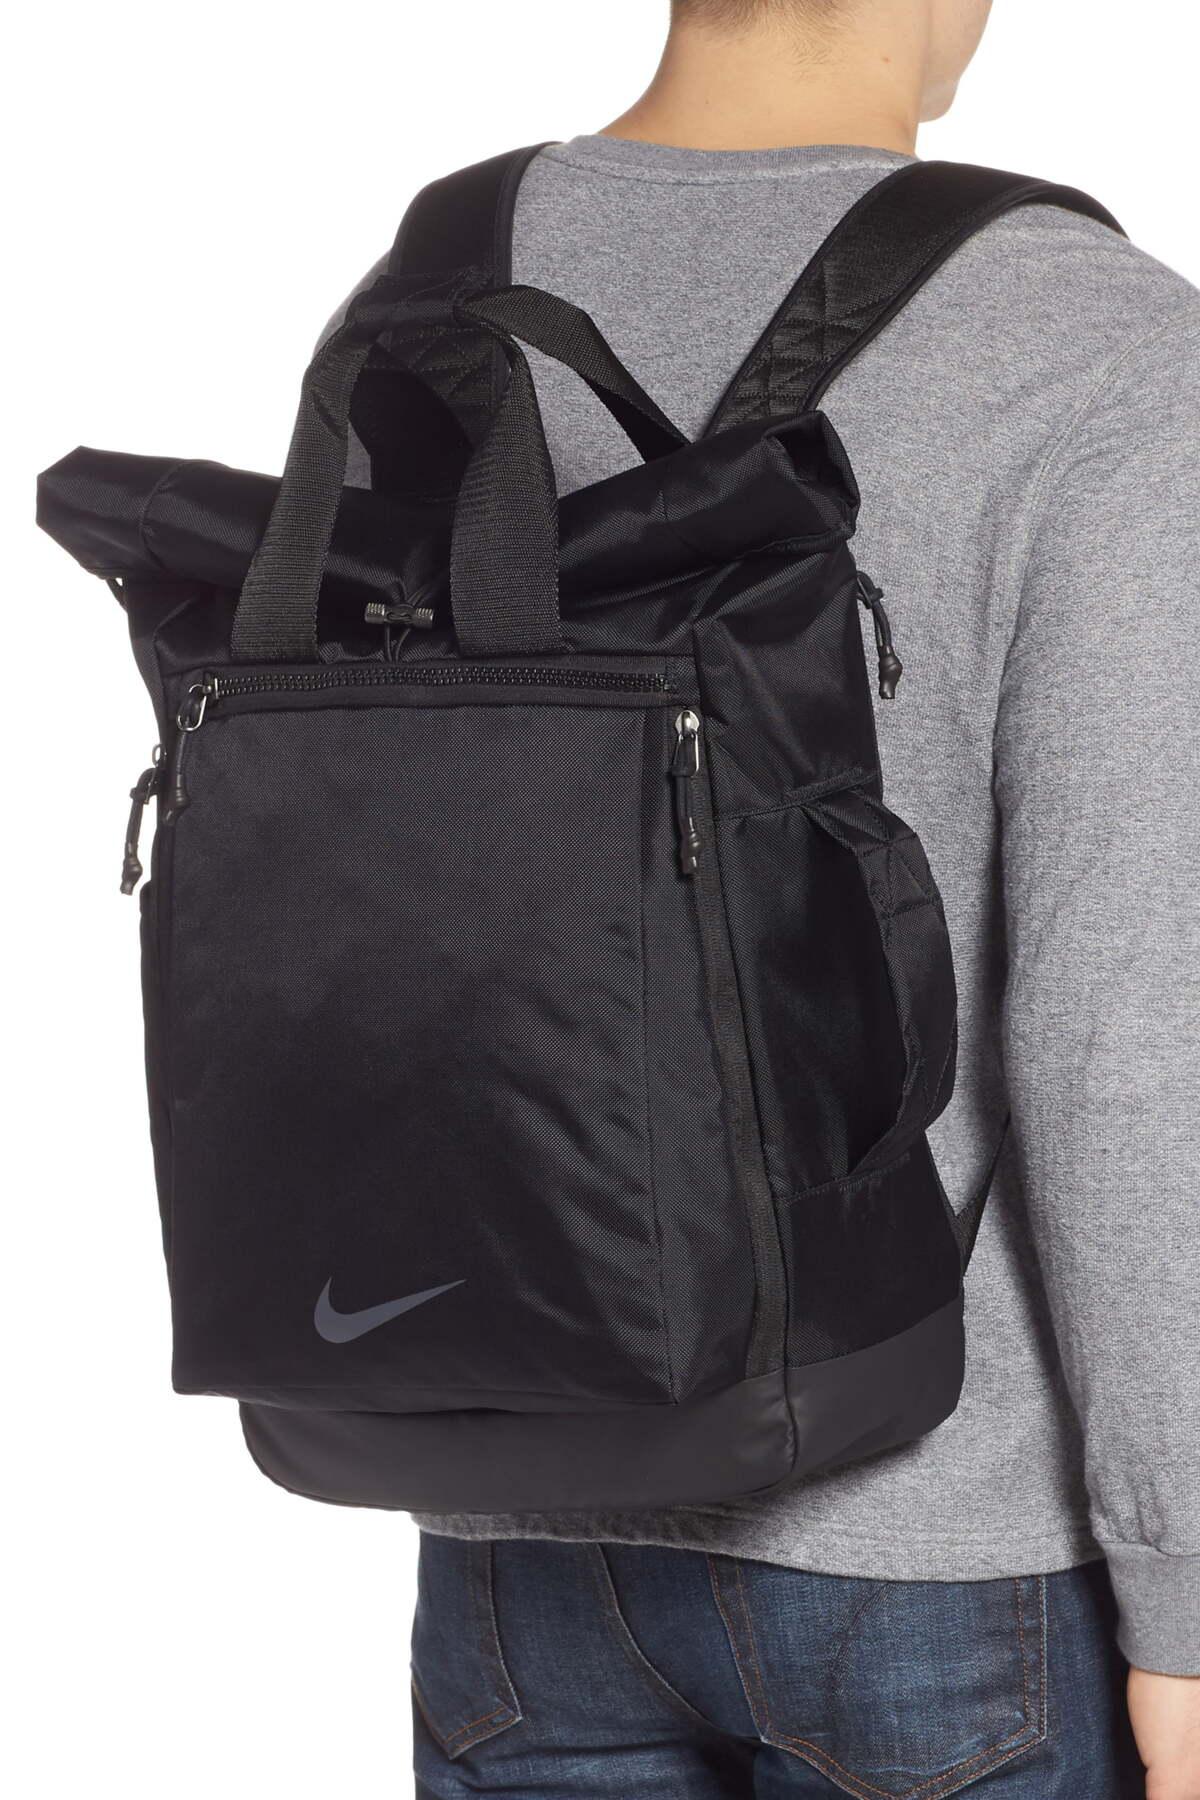 Nike Vapor Energy 2.0 Training Backpack Hot Sale, SAVE 51% - online-pmo.com